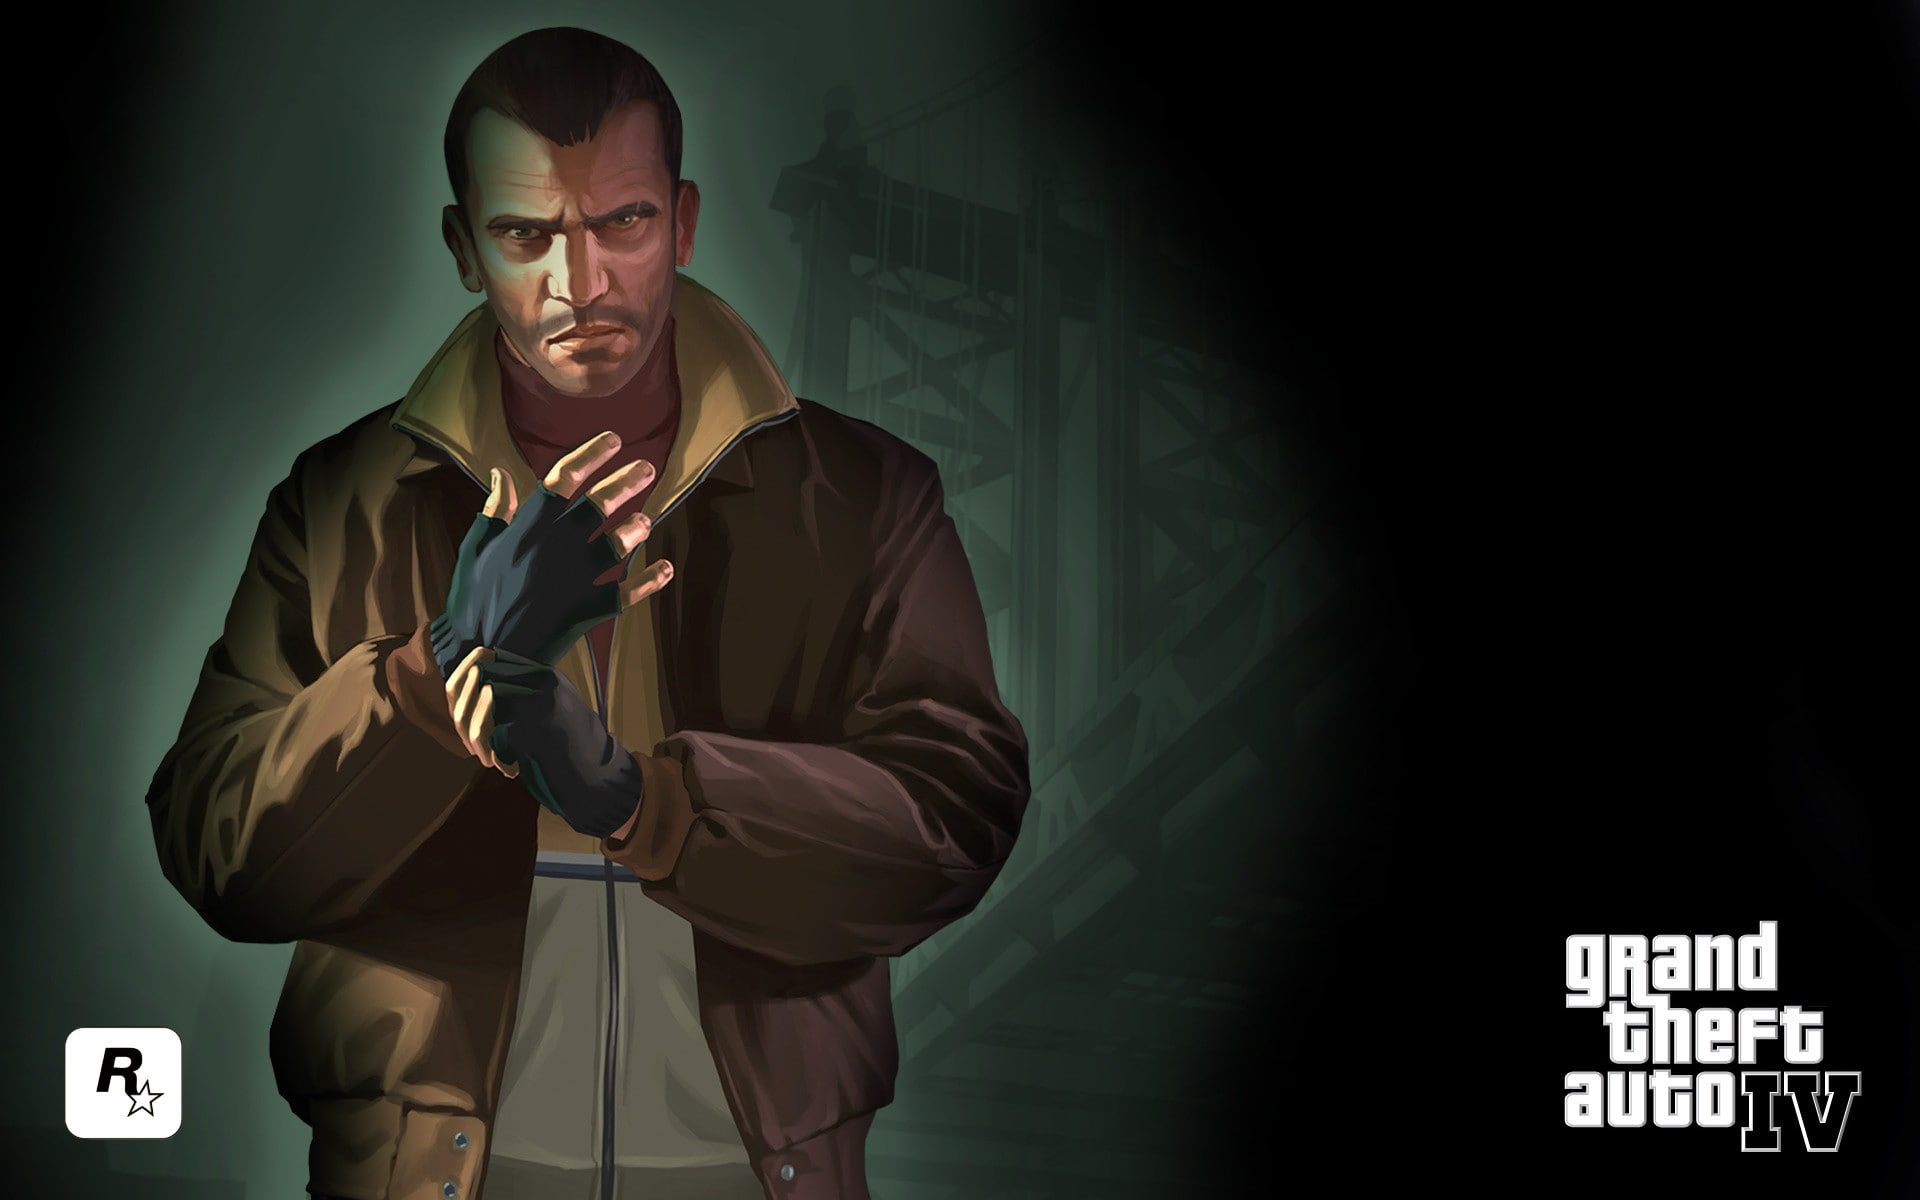 Grand Theft Auto IV, Niko Bellic, video games